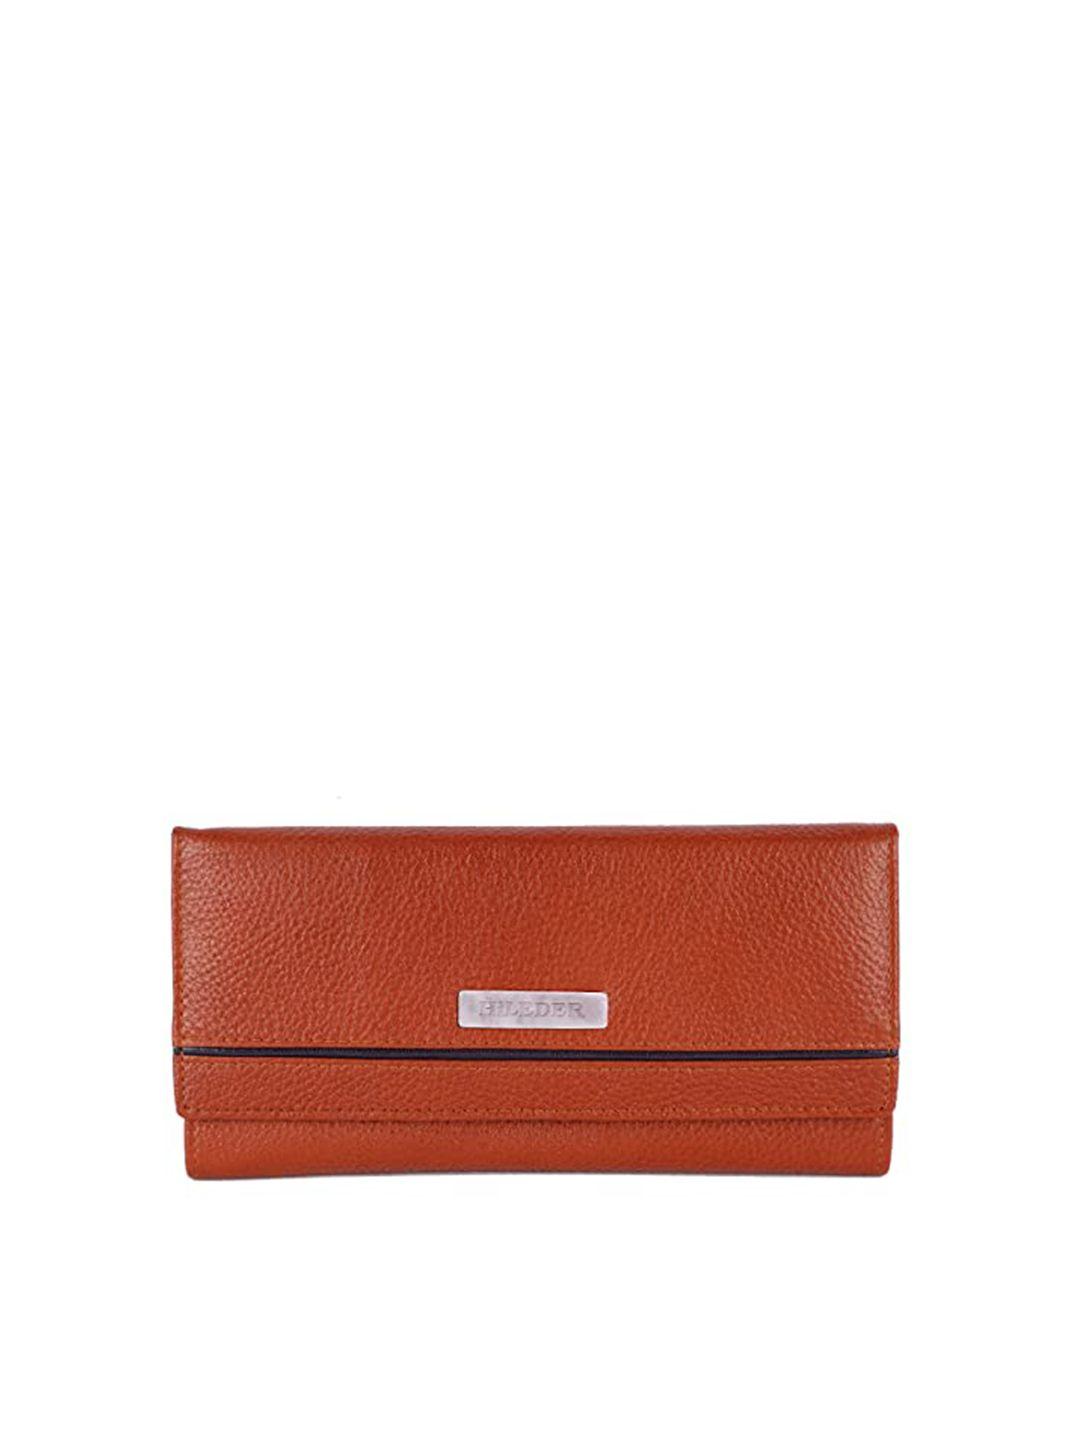 hileder leather textured purse clutch